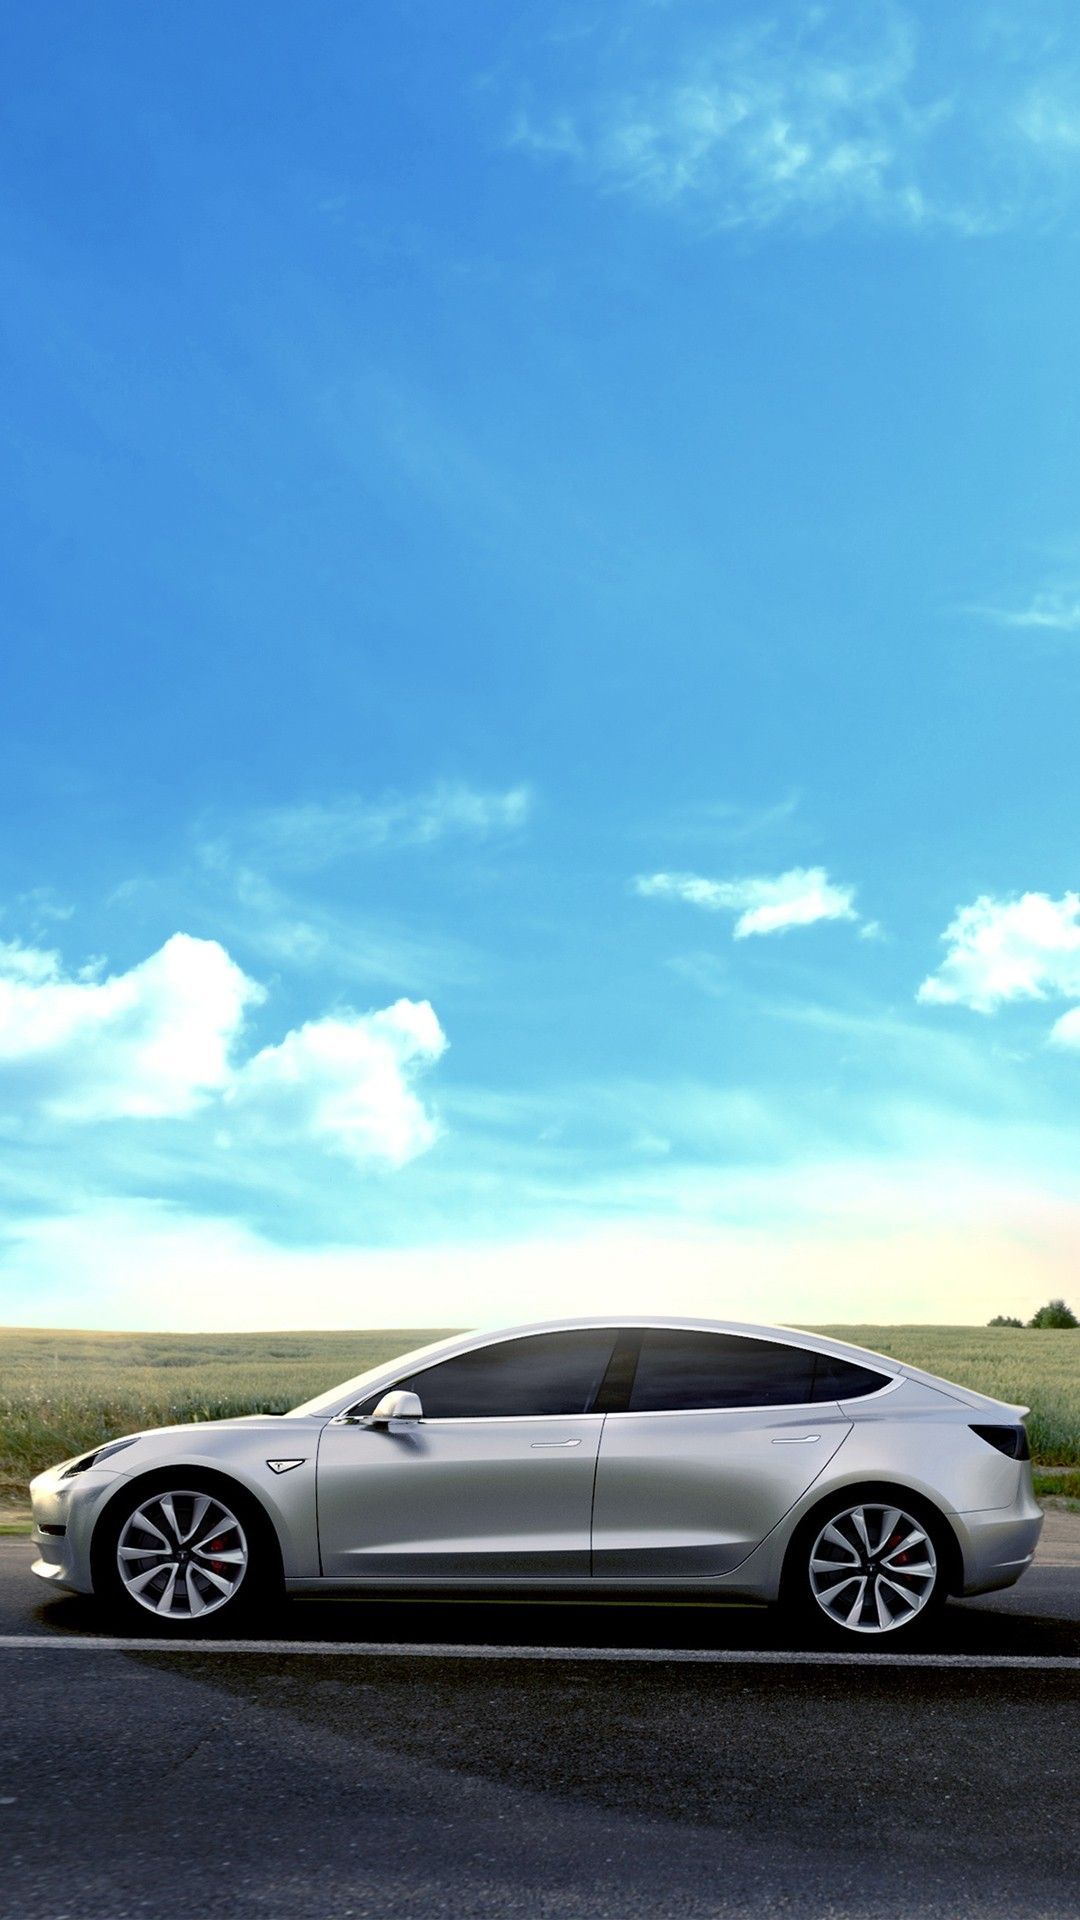 Tesla Model 3 Sky Clouds Smartphone Wallpaper and Lockscreen HD